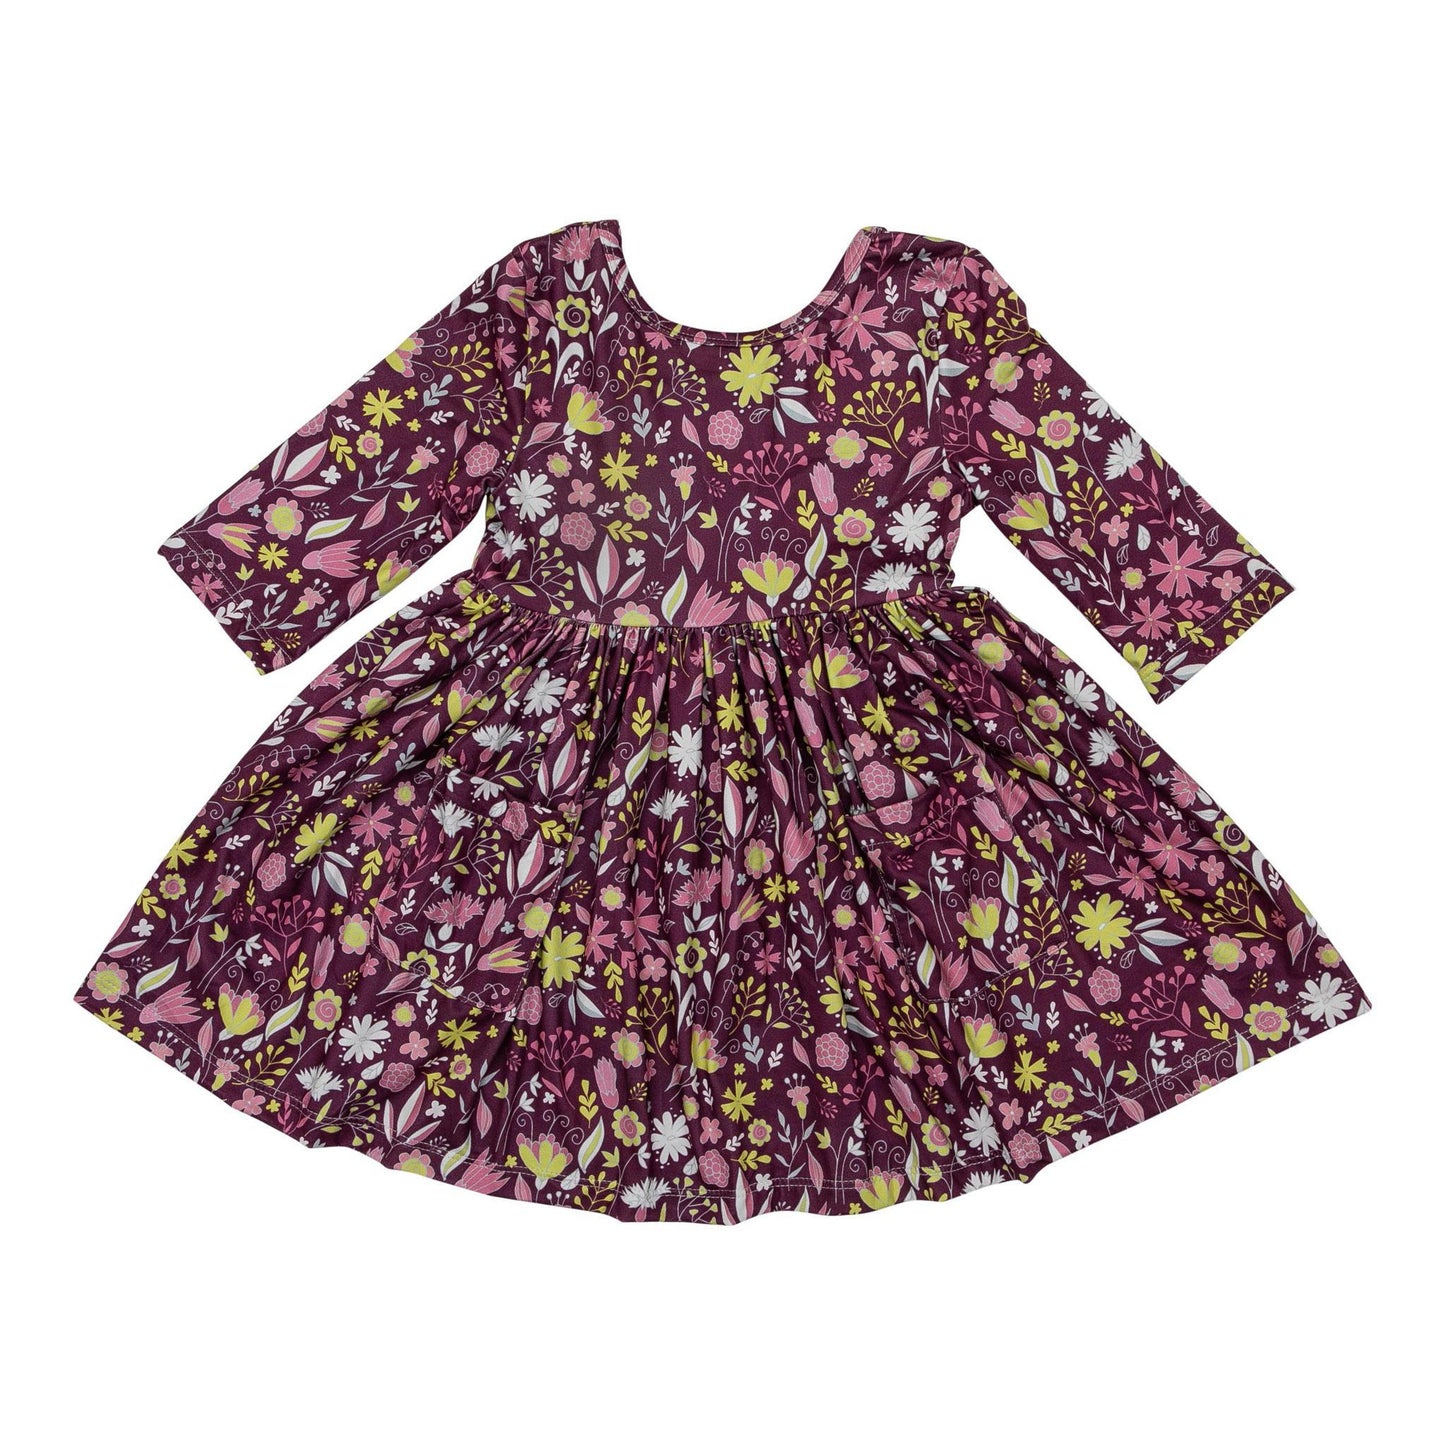 Mila & Rose "Vintage Blooms" 3/4 Sleeve Pocket Twirl Dress